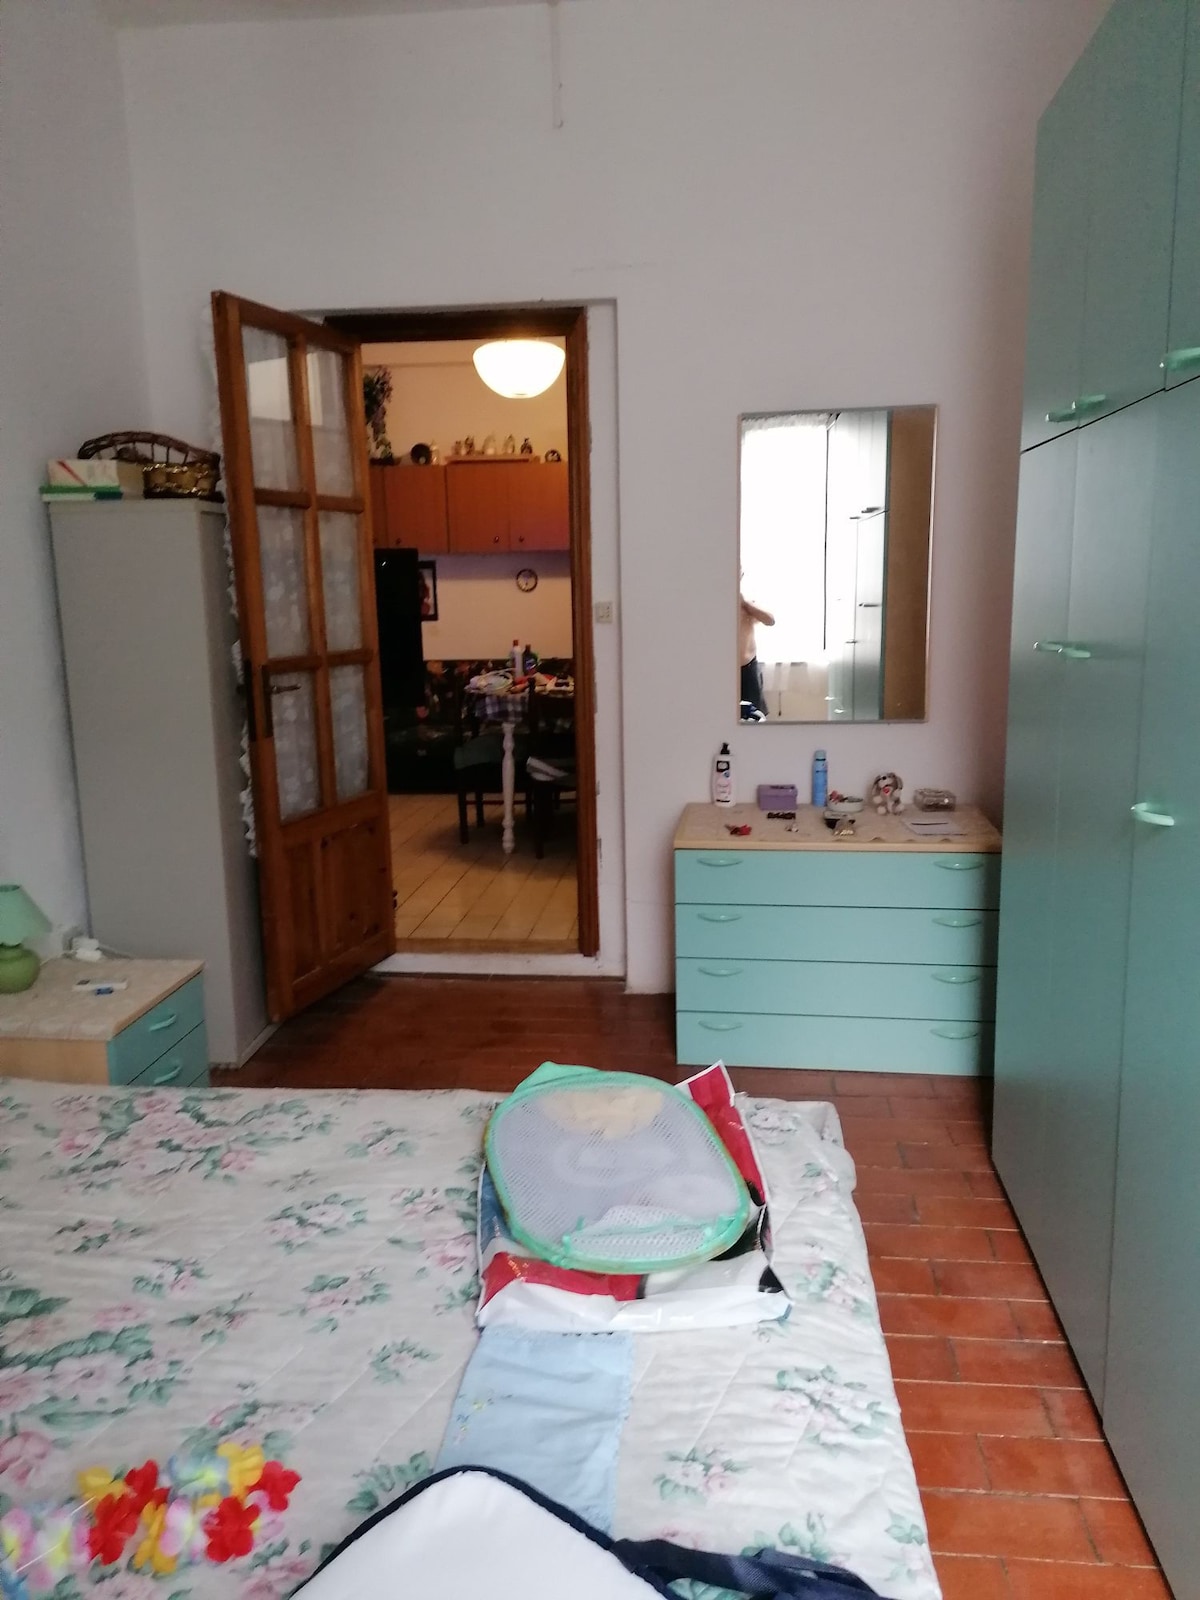 SARA ，位于南撒丁岛Buggerru的漂亮公寓，约50平方米，配备所有家电和4张床。租金为40欧元/天x至少10天。